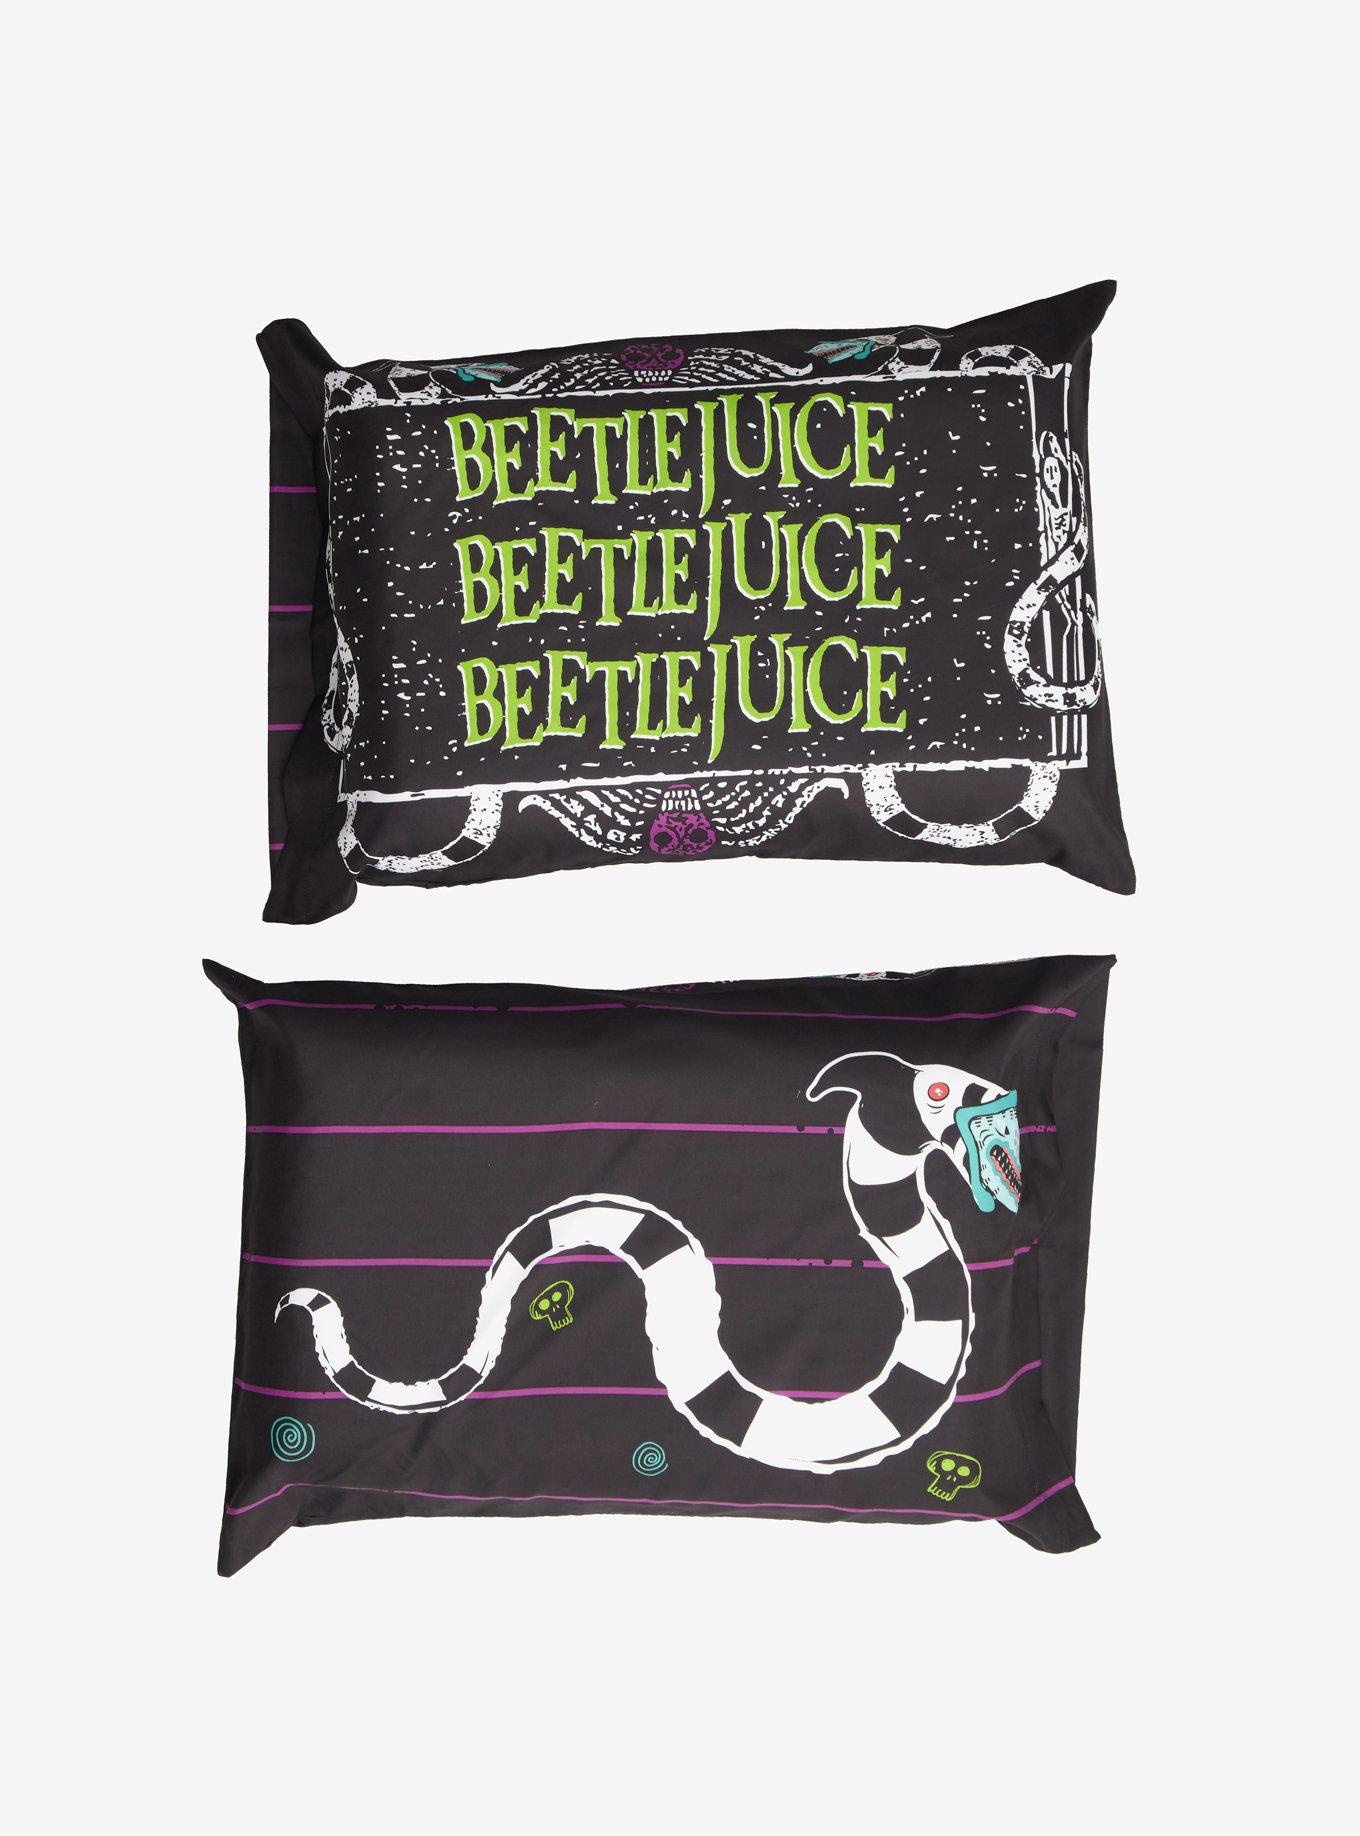 Beetlejuice Name & Sandworm Pillowcase Set, , hi-res